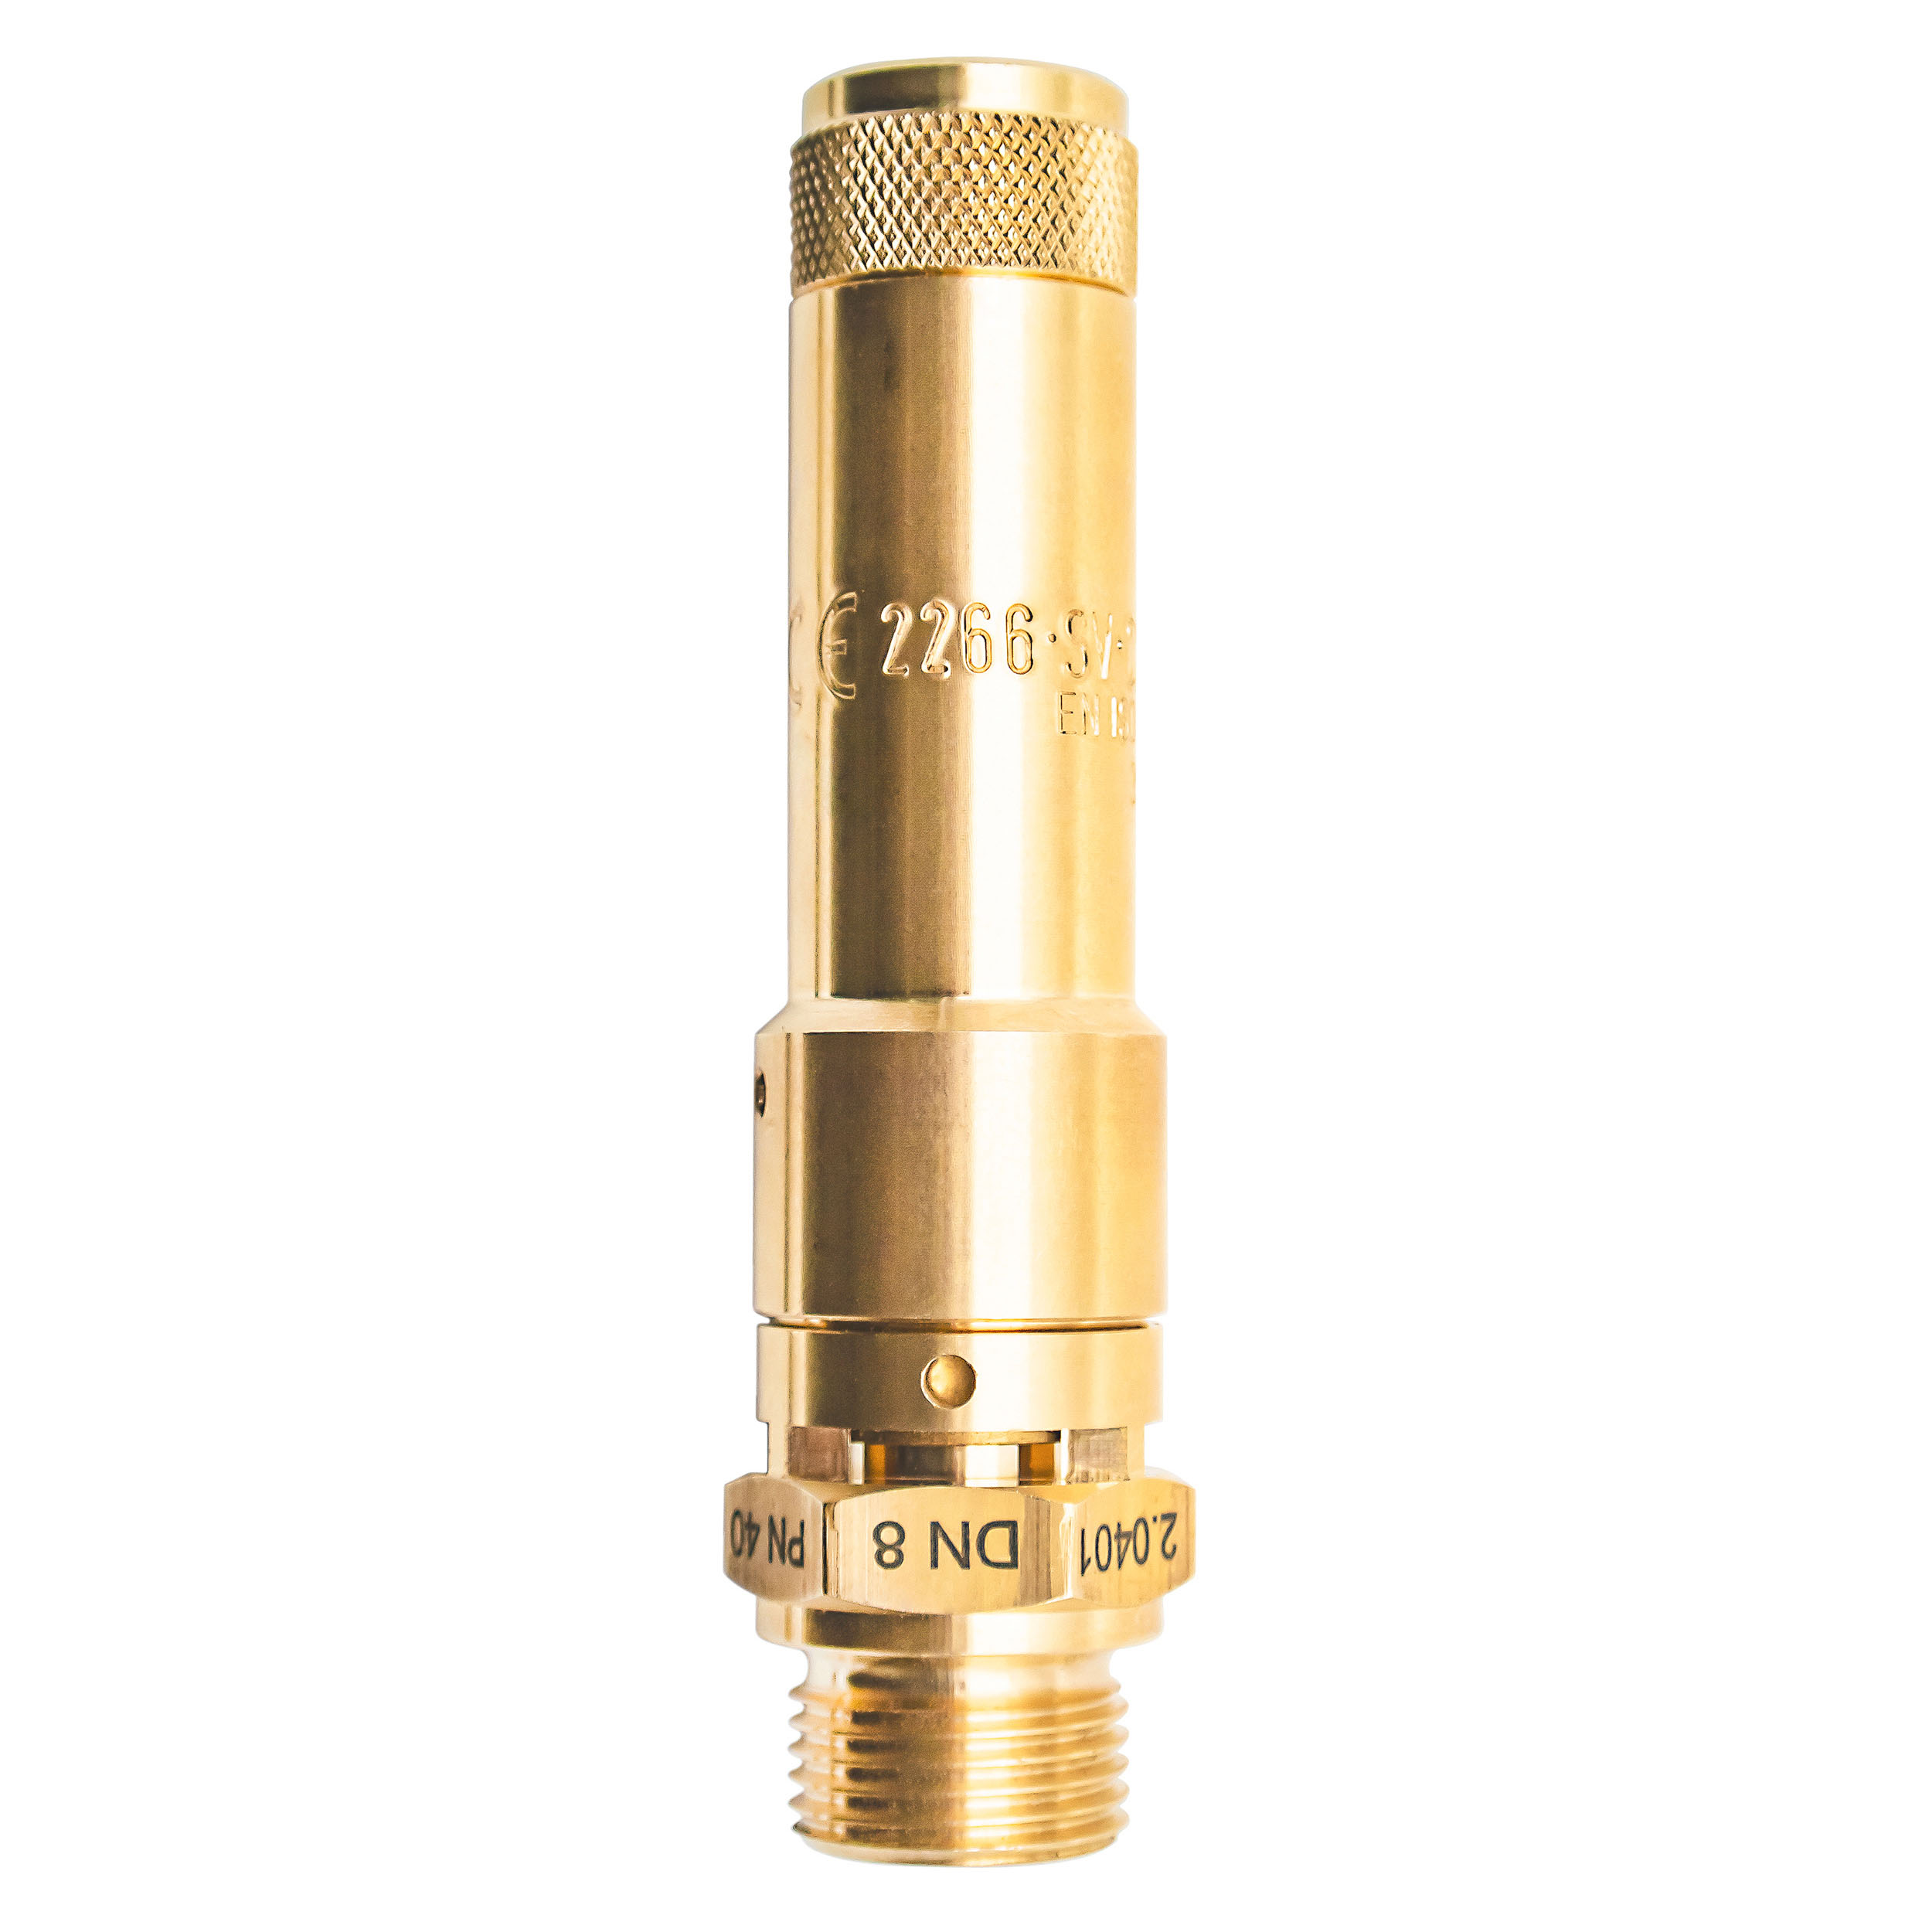 Component-tested safety valve DN 8, G½, pressure: 7.1-9 bar